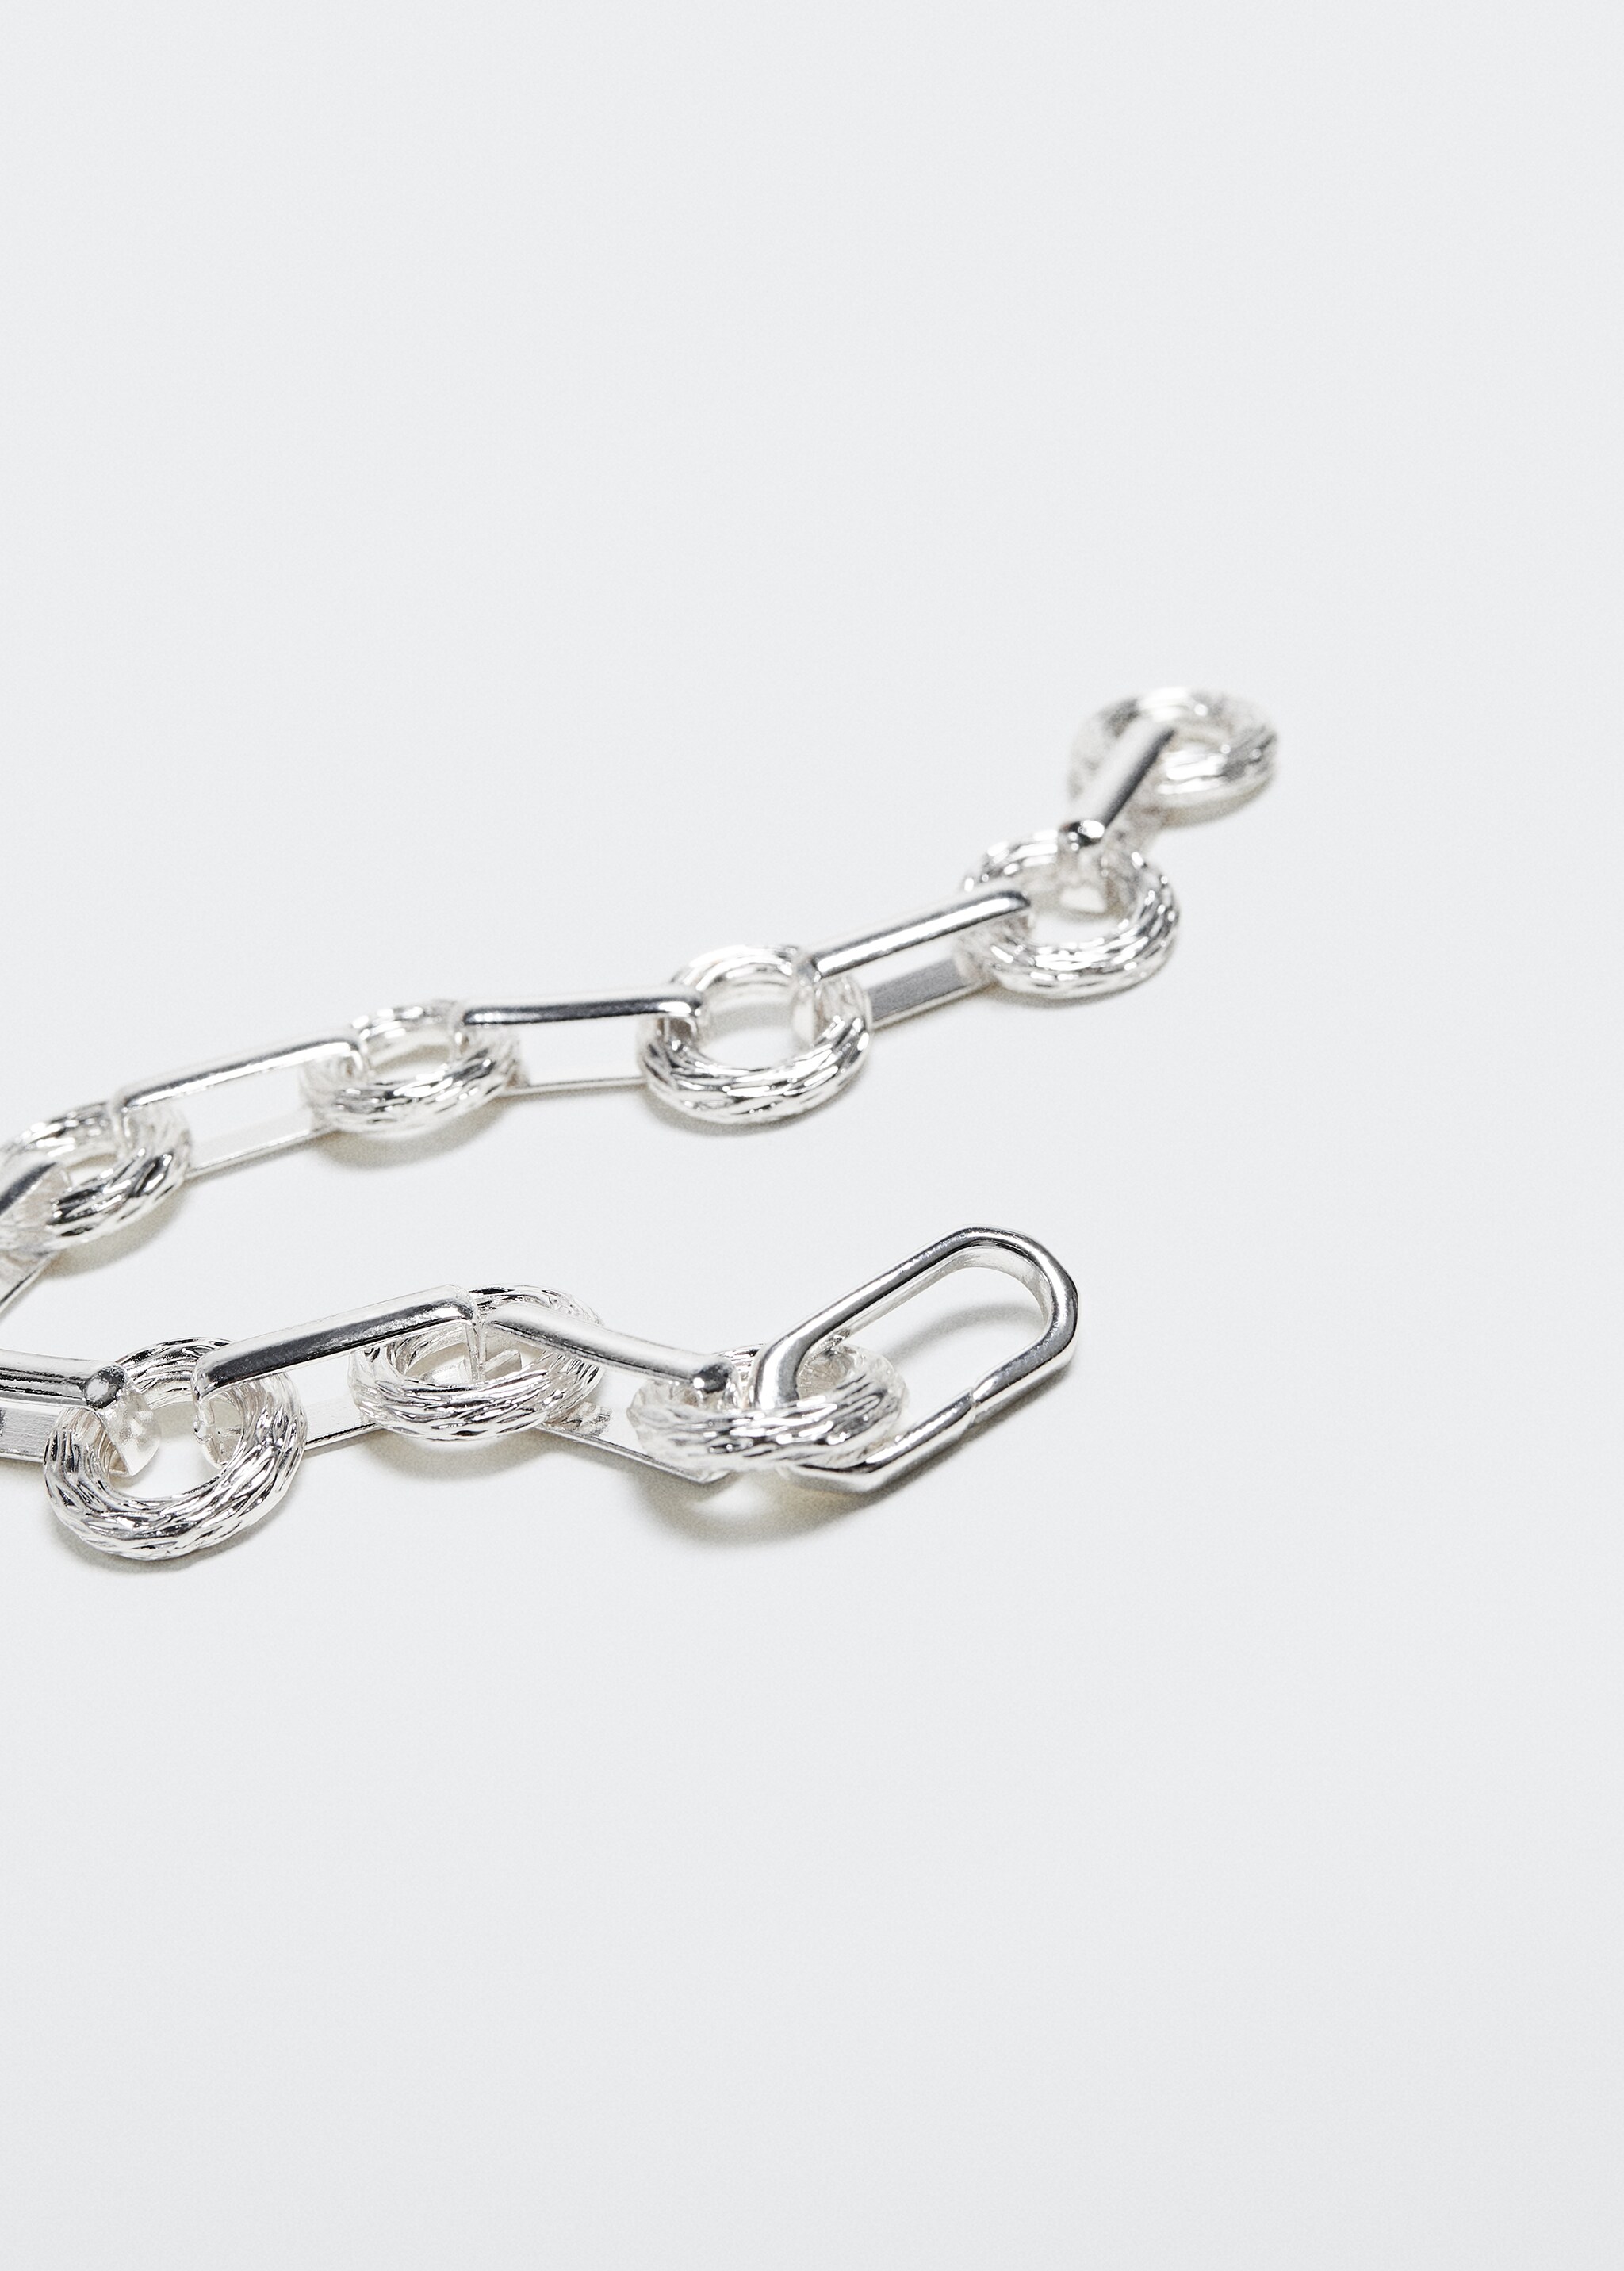 Combined chain bracelet - Medium plane